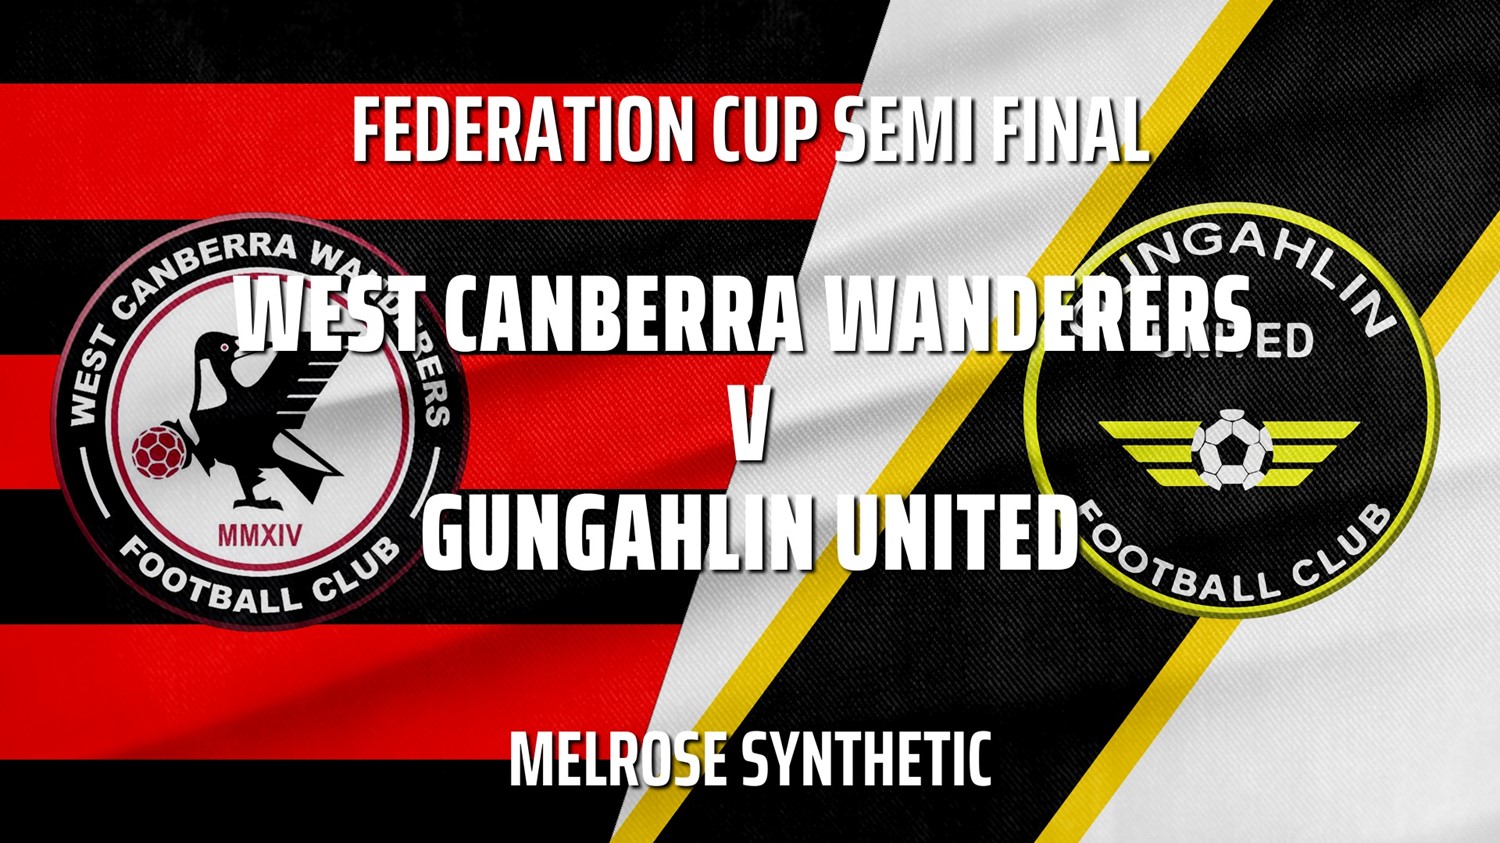 210511-Federation Cup Semi Final - West Canberra Wanderers v Gungahlin United FC (women) Slate Image